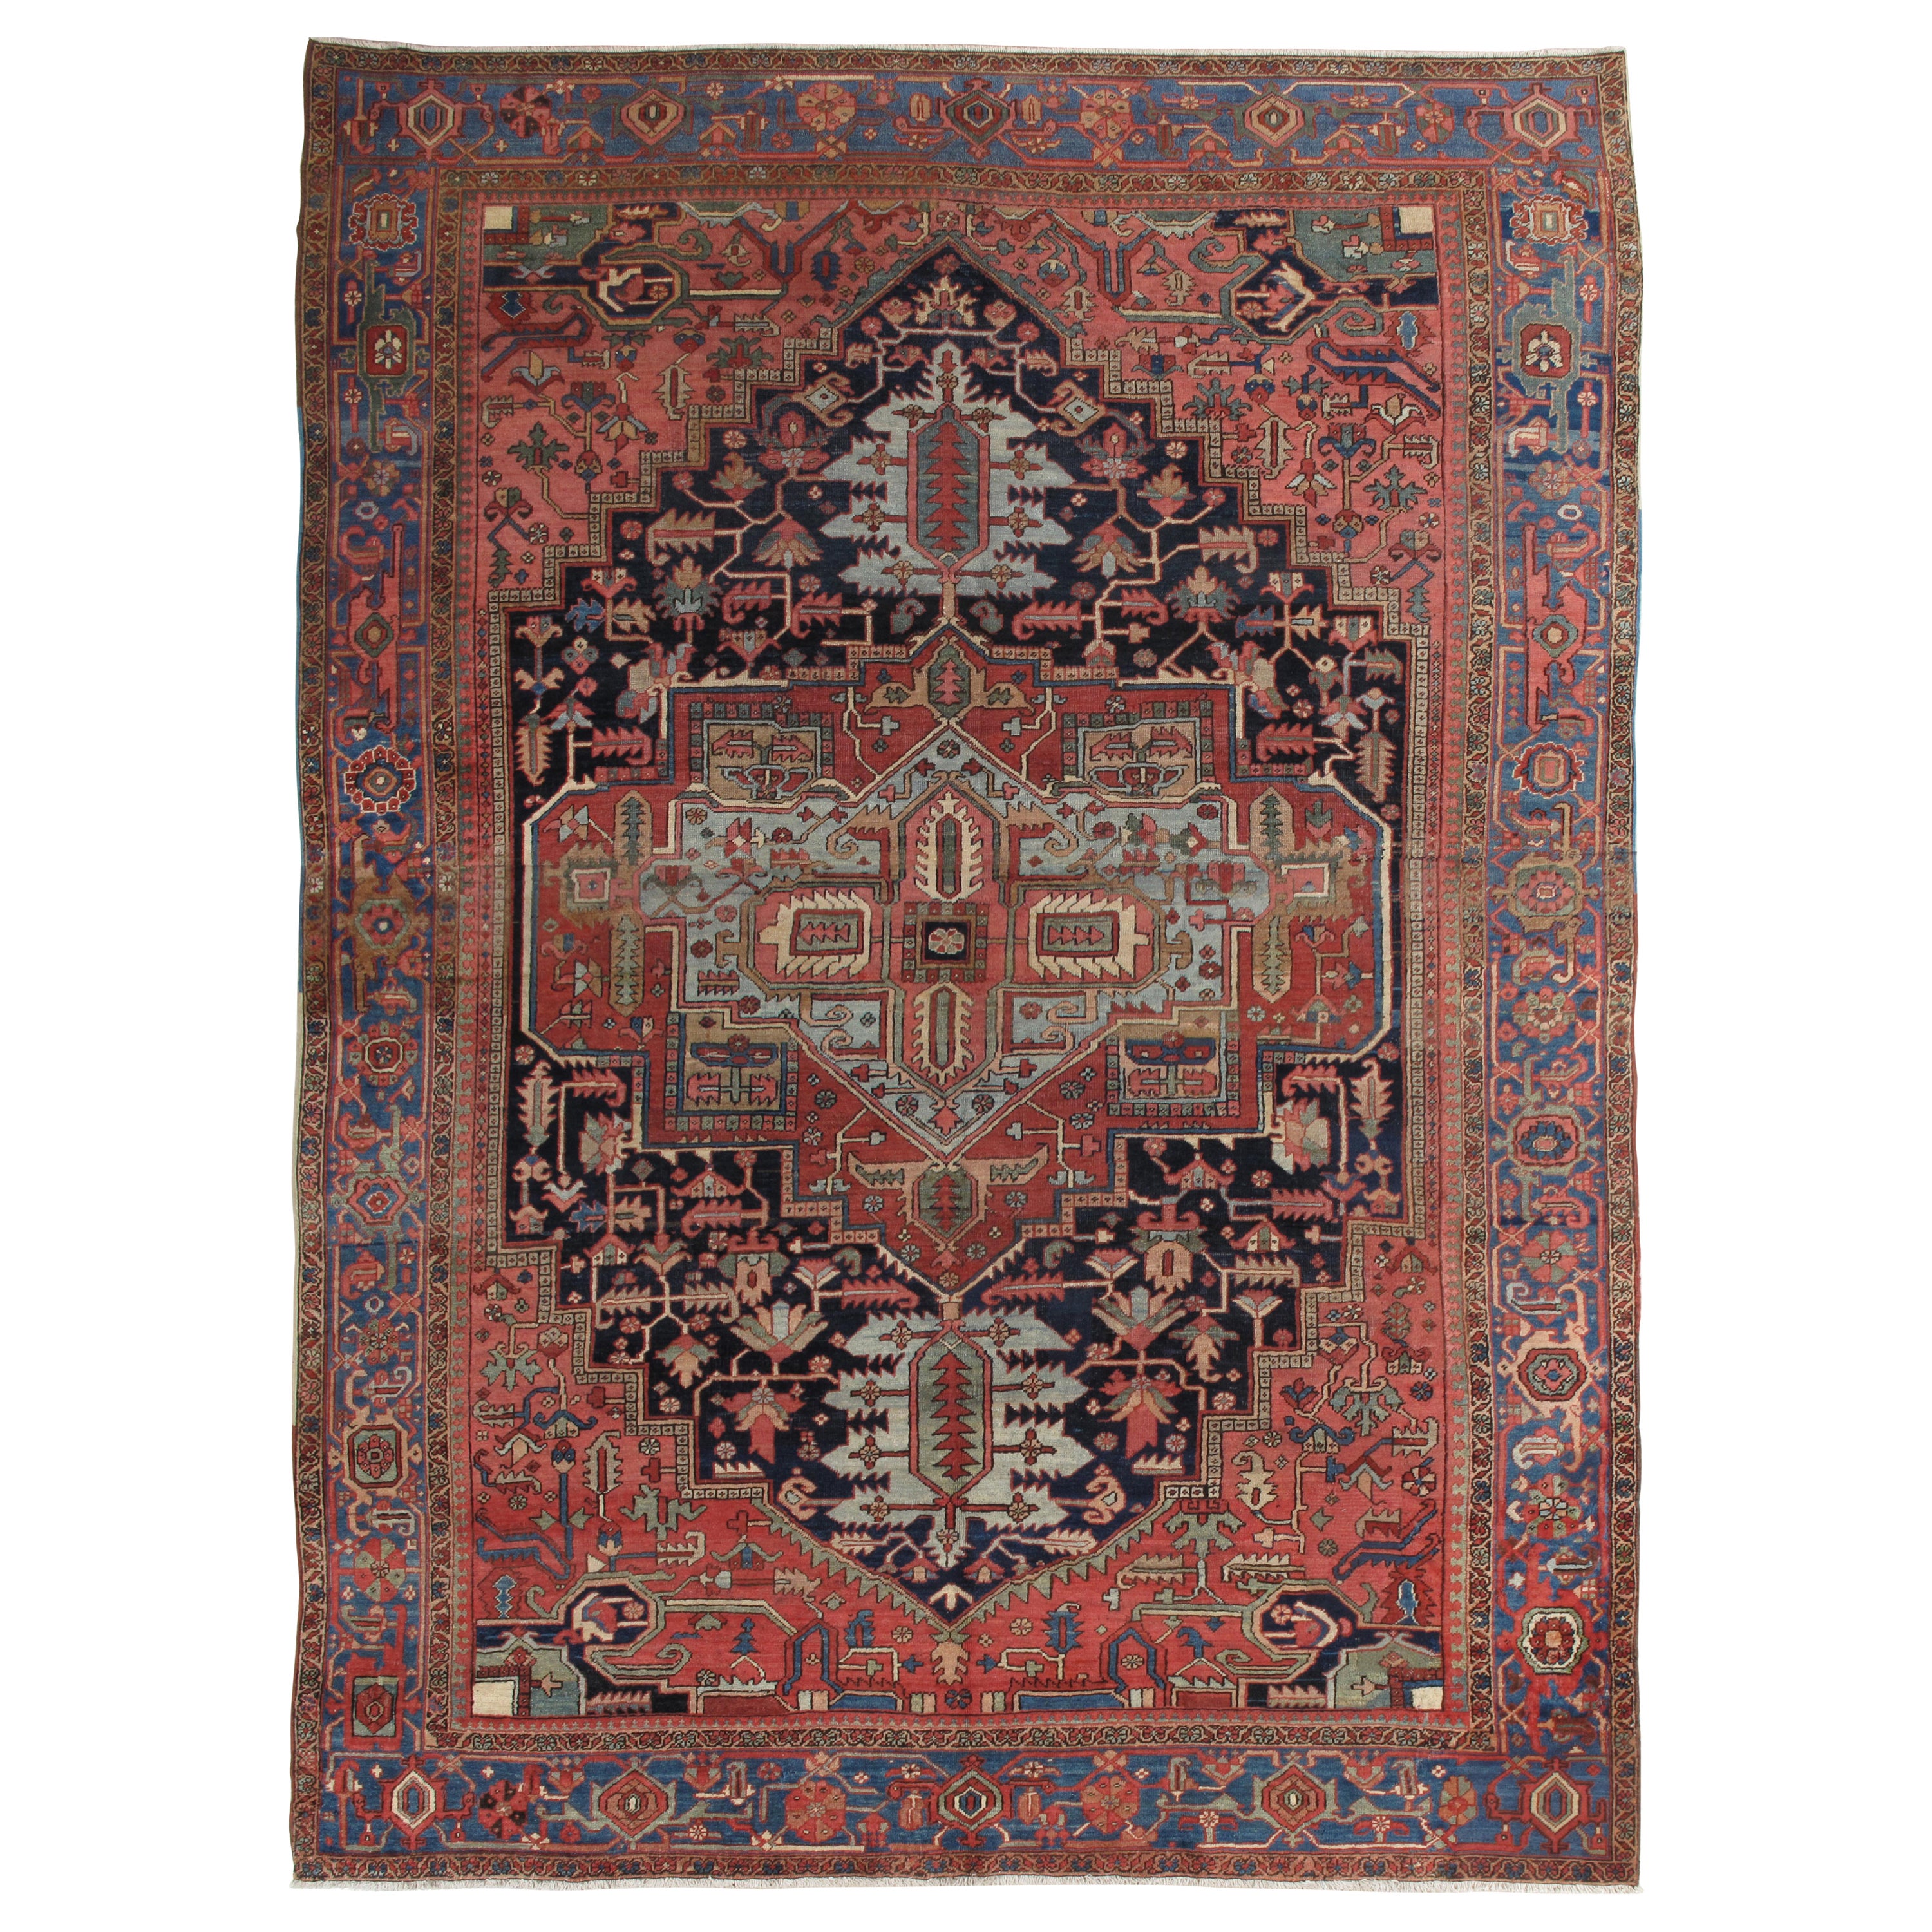 Antique Persian Heriz Carpet Handmade Wool Oriental Rug, Rust, Navy, Light Blue For Sale